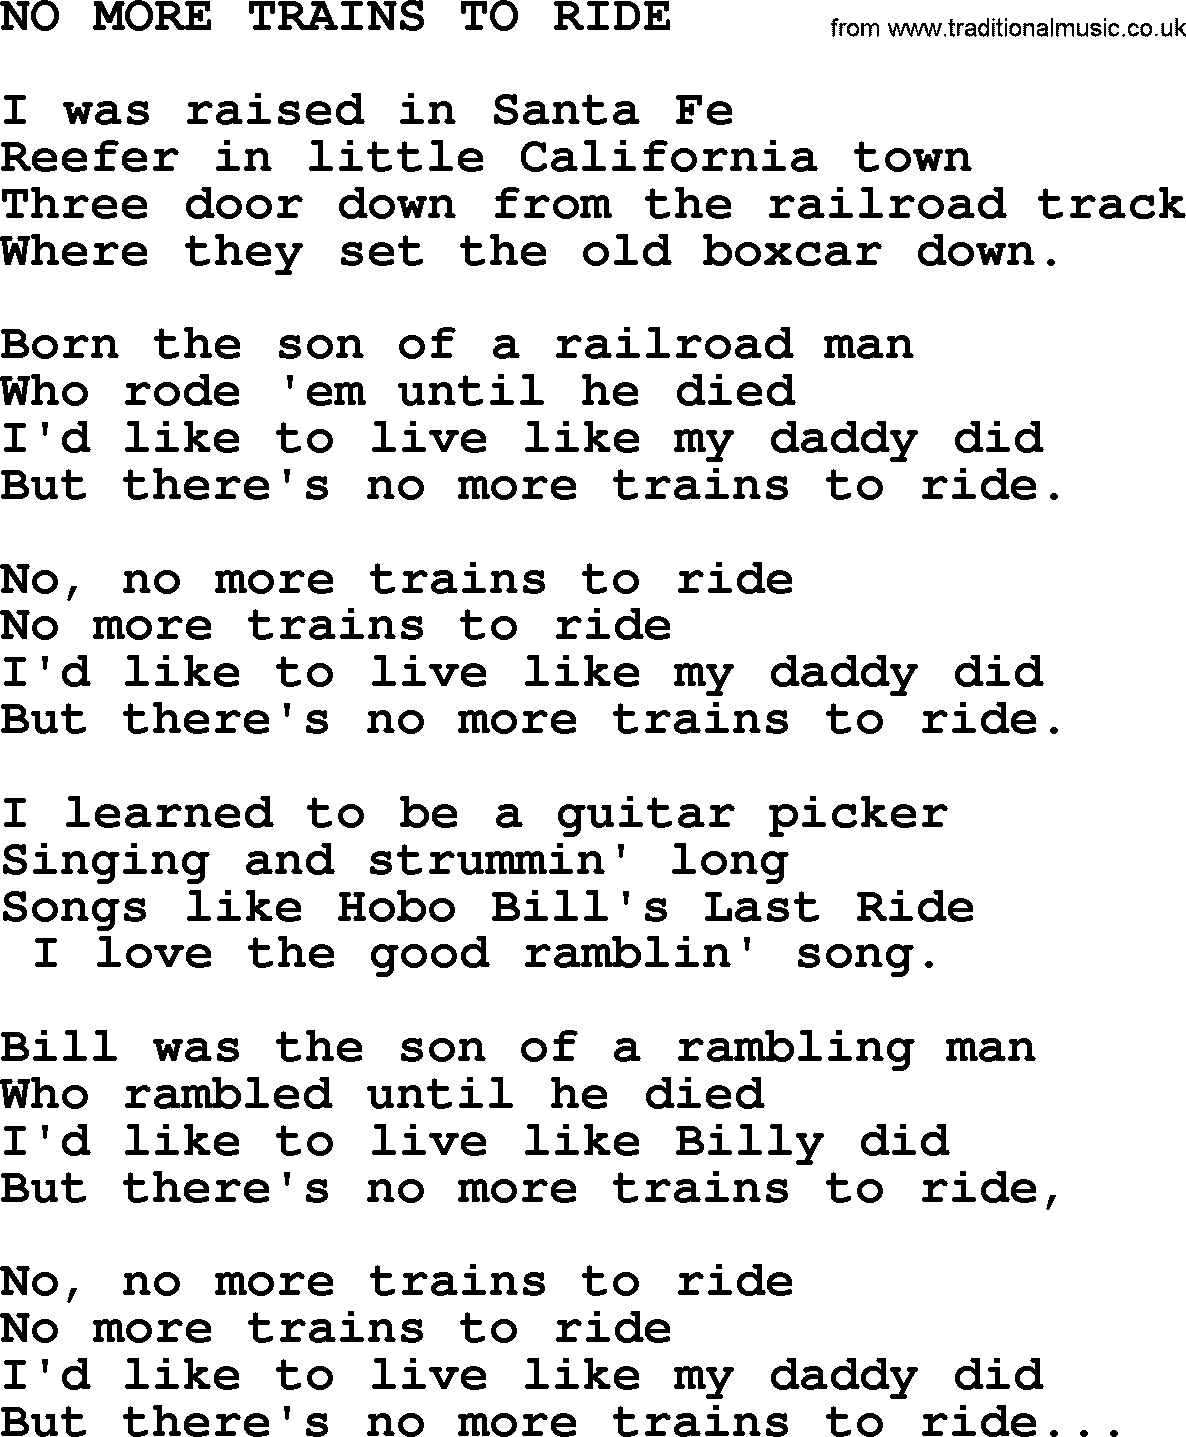 Merle Haggard song: No More Trains To Ride, lyrics.